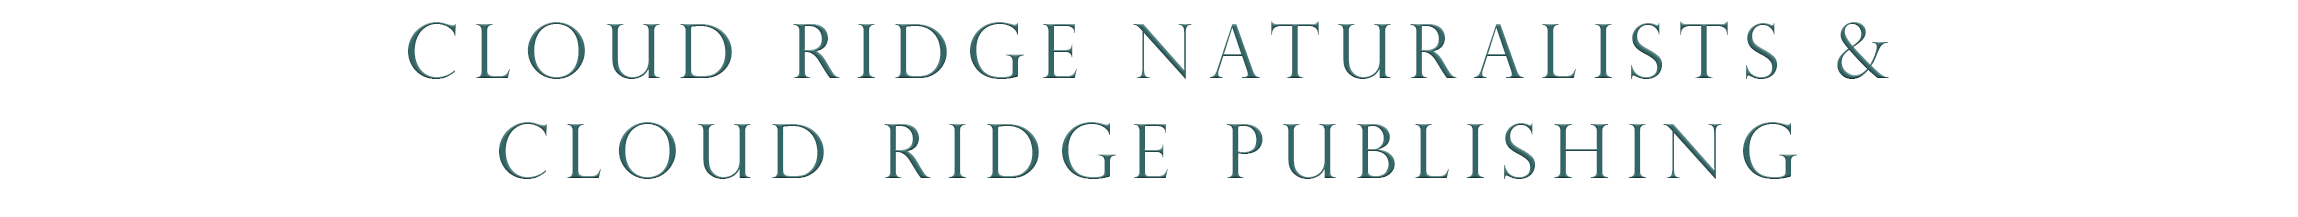 Cloud Ridge Naturalists & Cloud Ridge Publishing